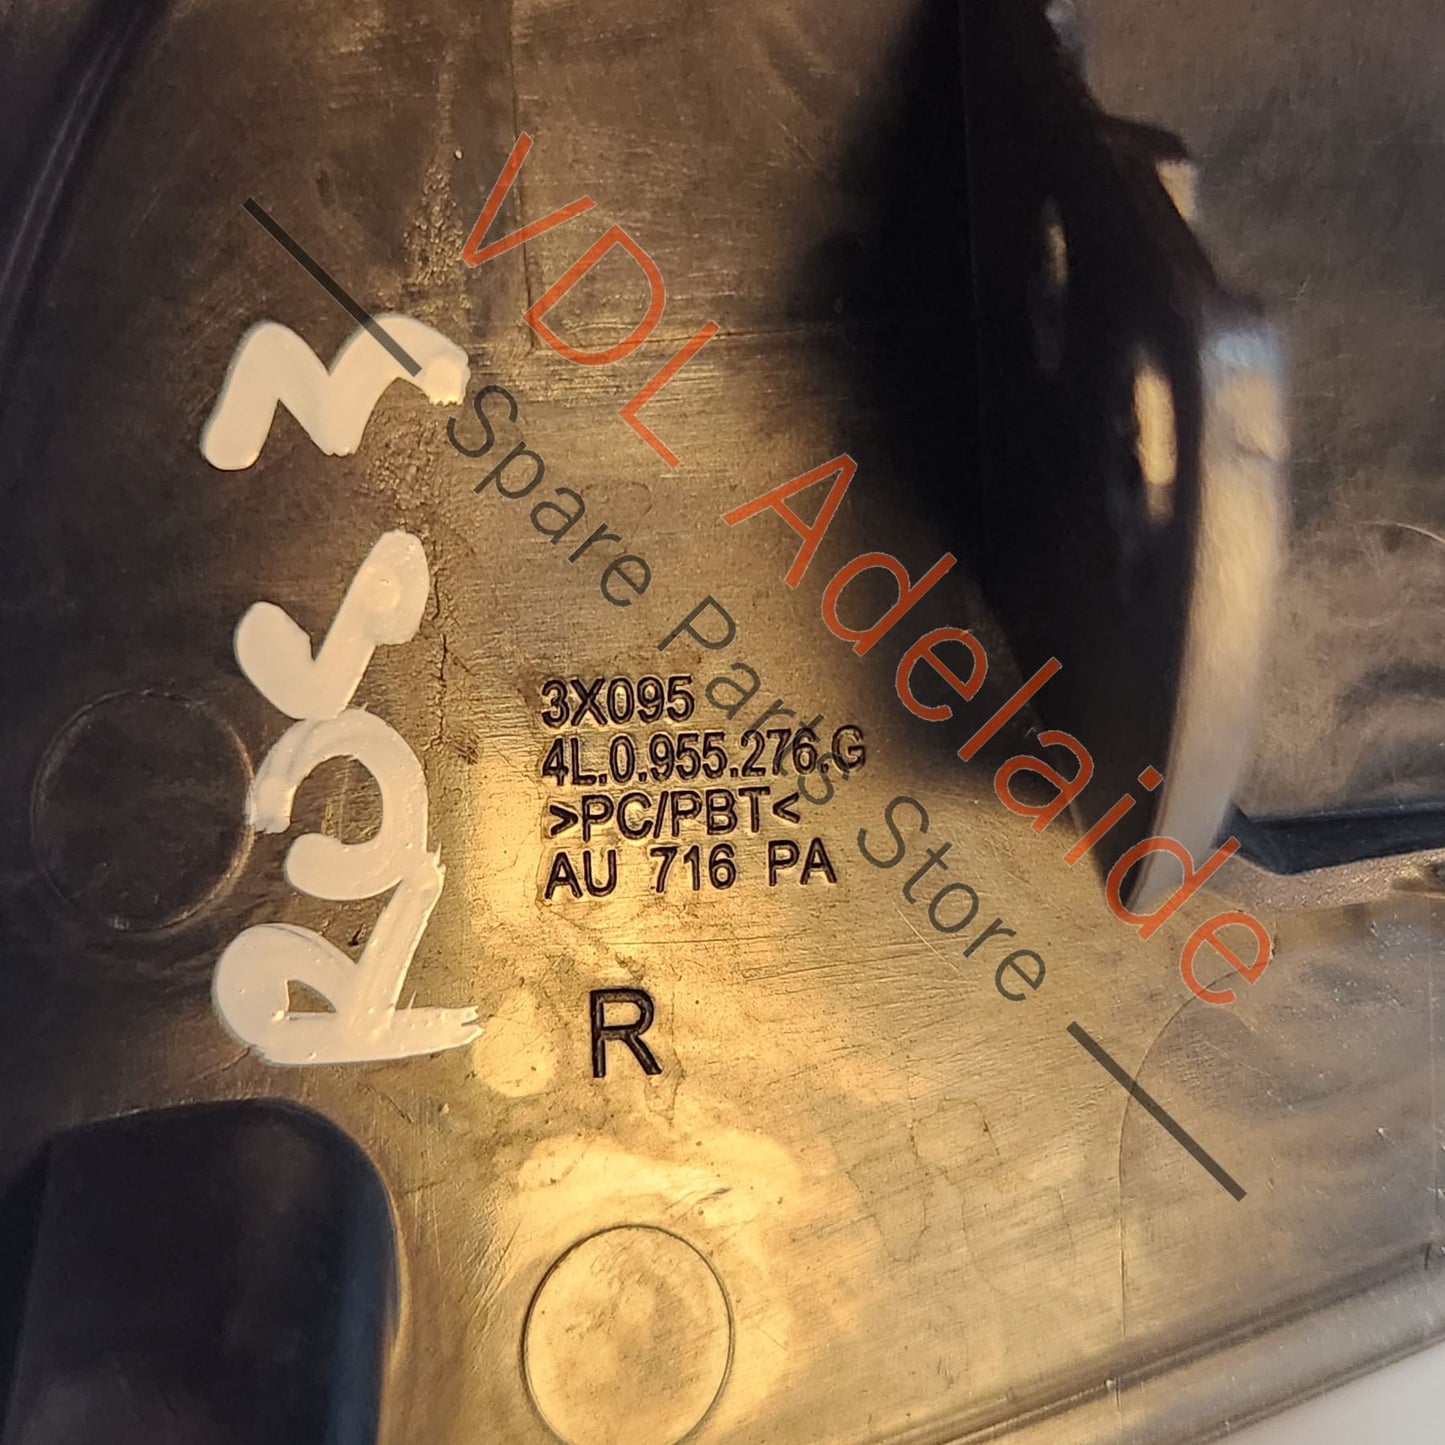 4L0955276G    Audi Q7 4L Right RHS Side Headlight Washer Nozzle Cover Cap 4L0955276G